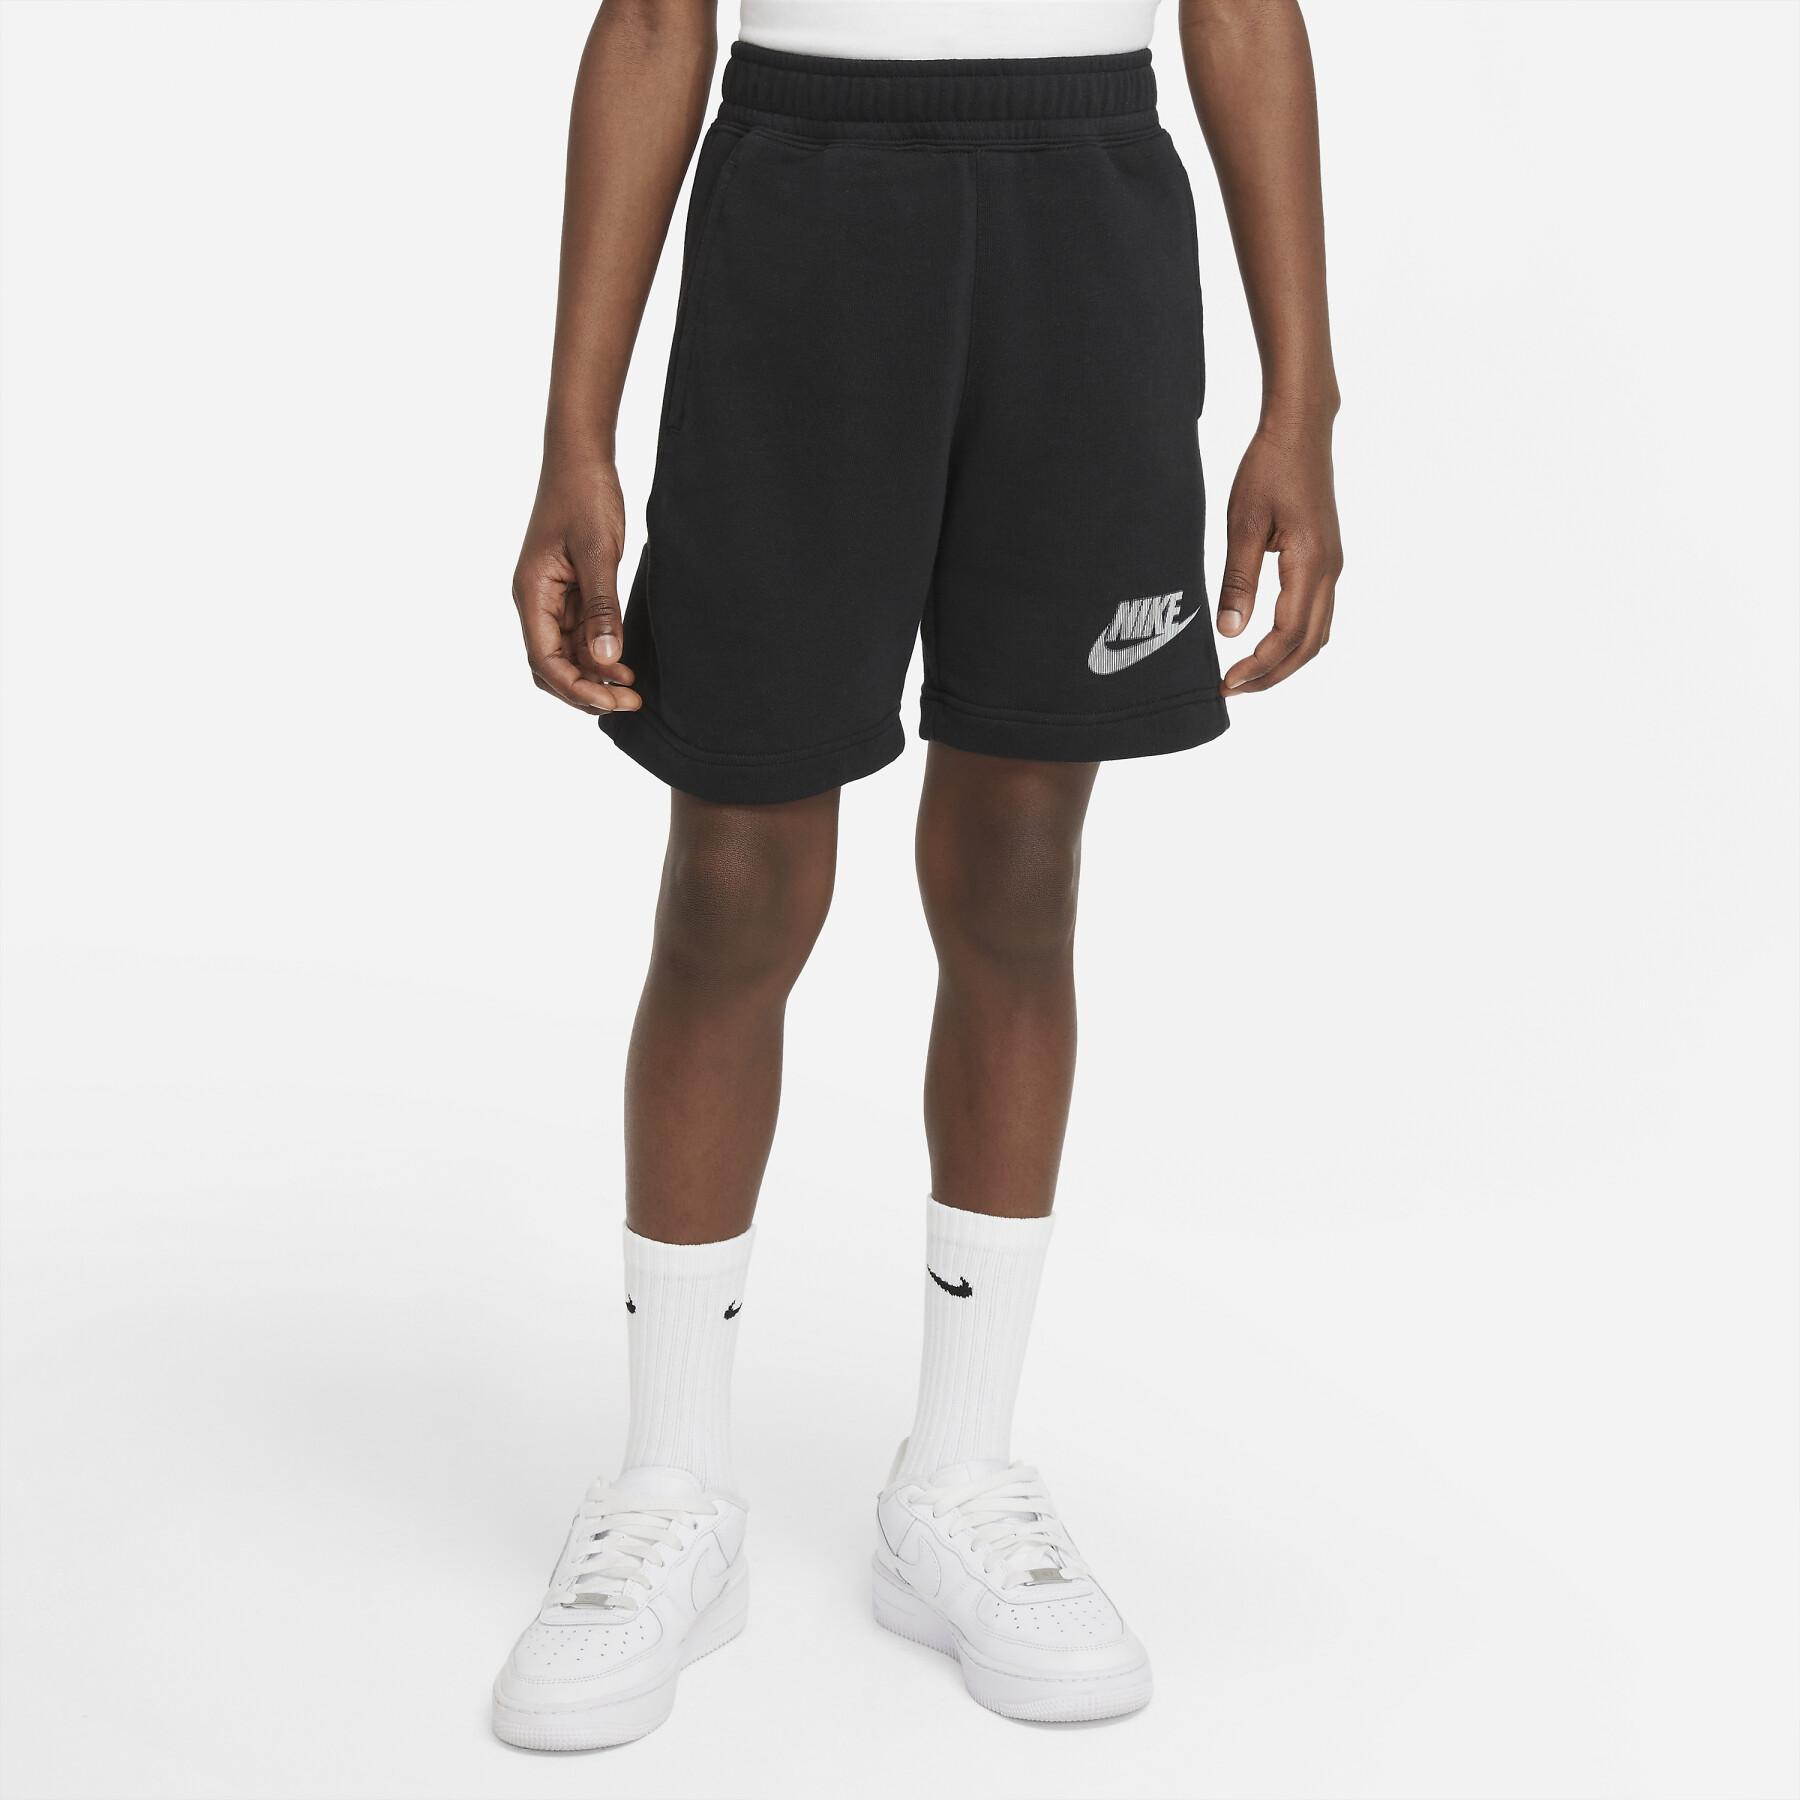 Kinder shorts Nike Hybrid